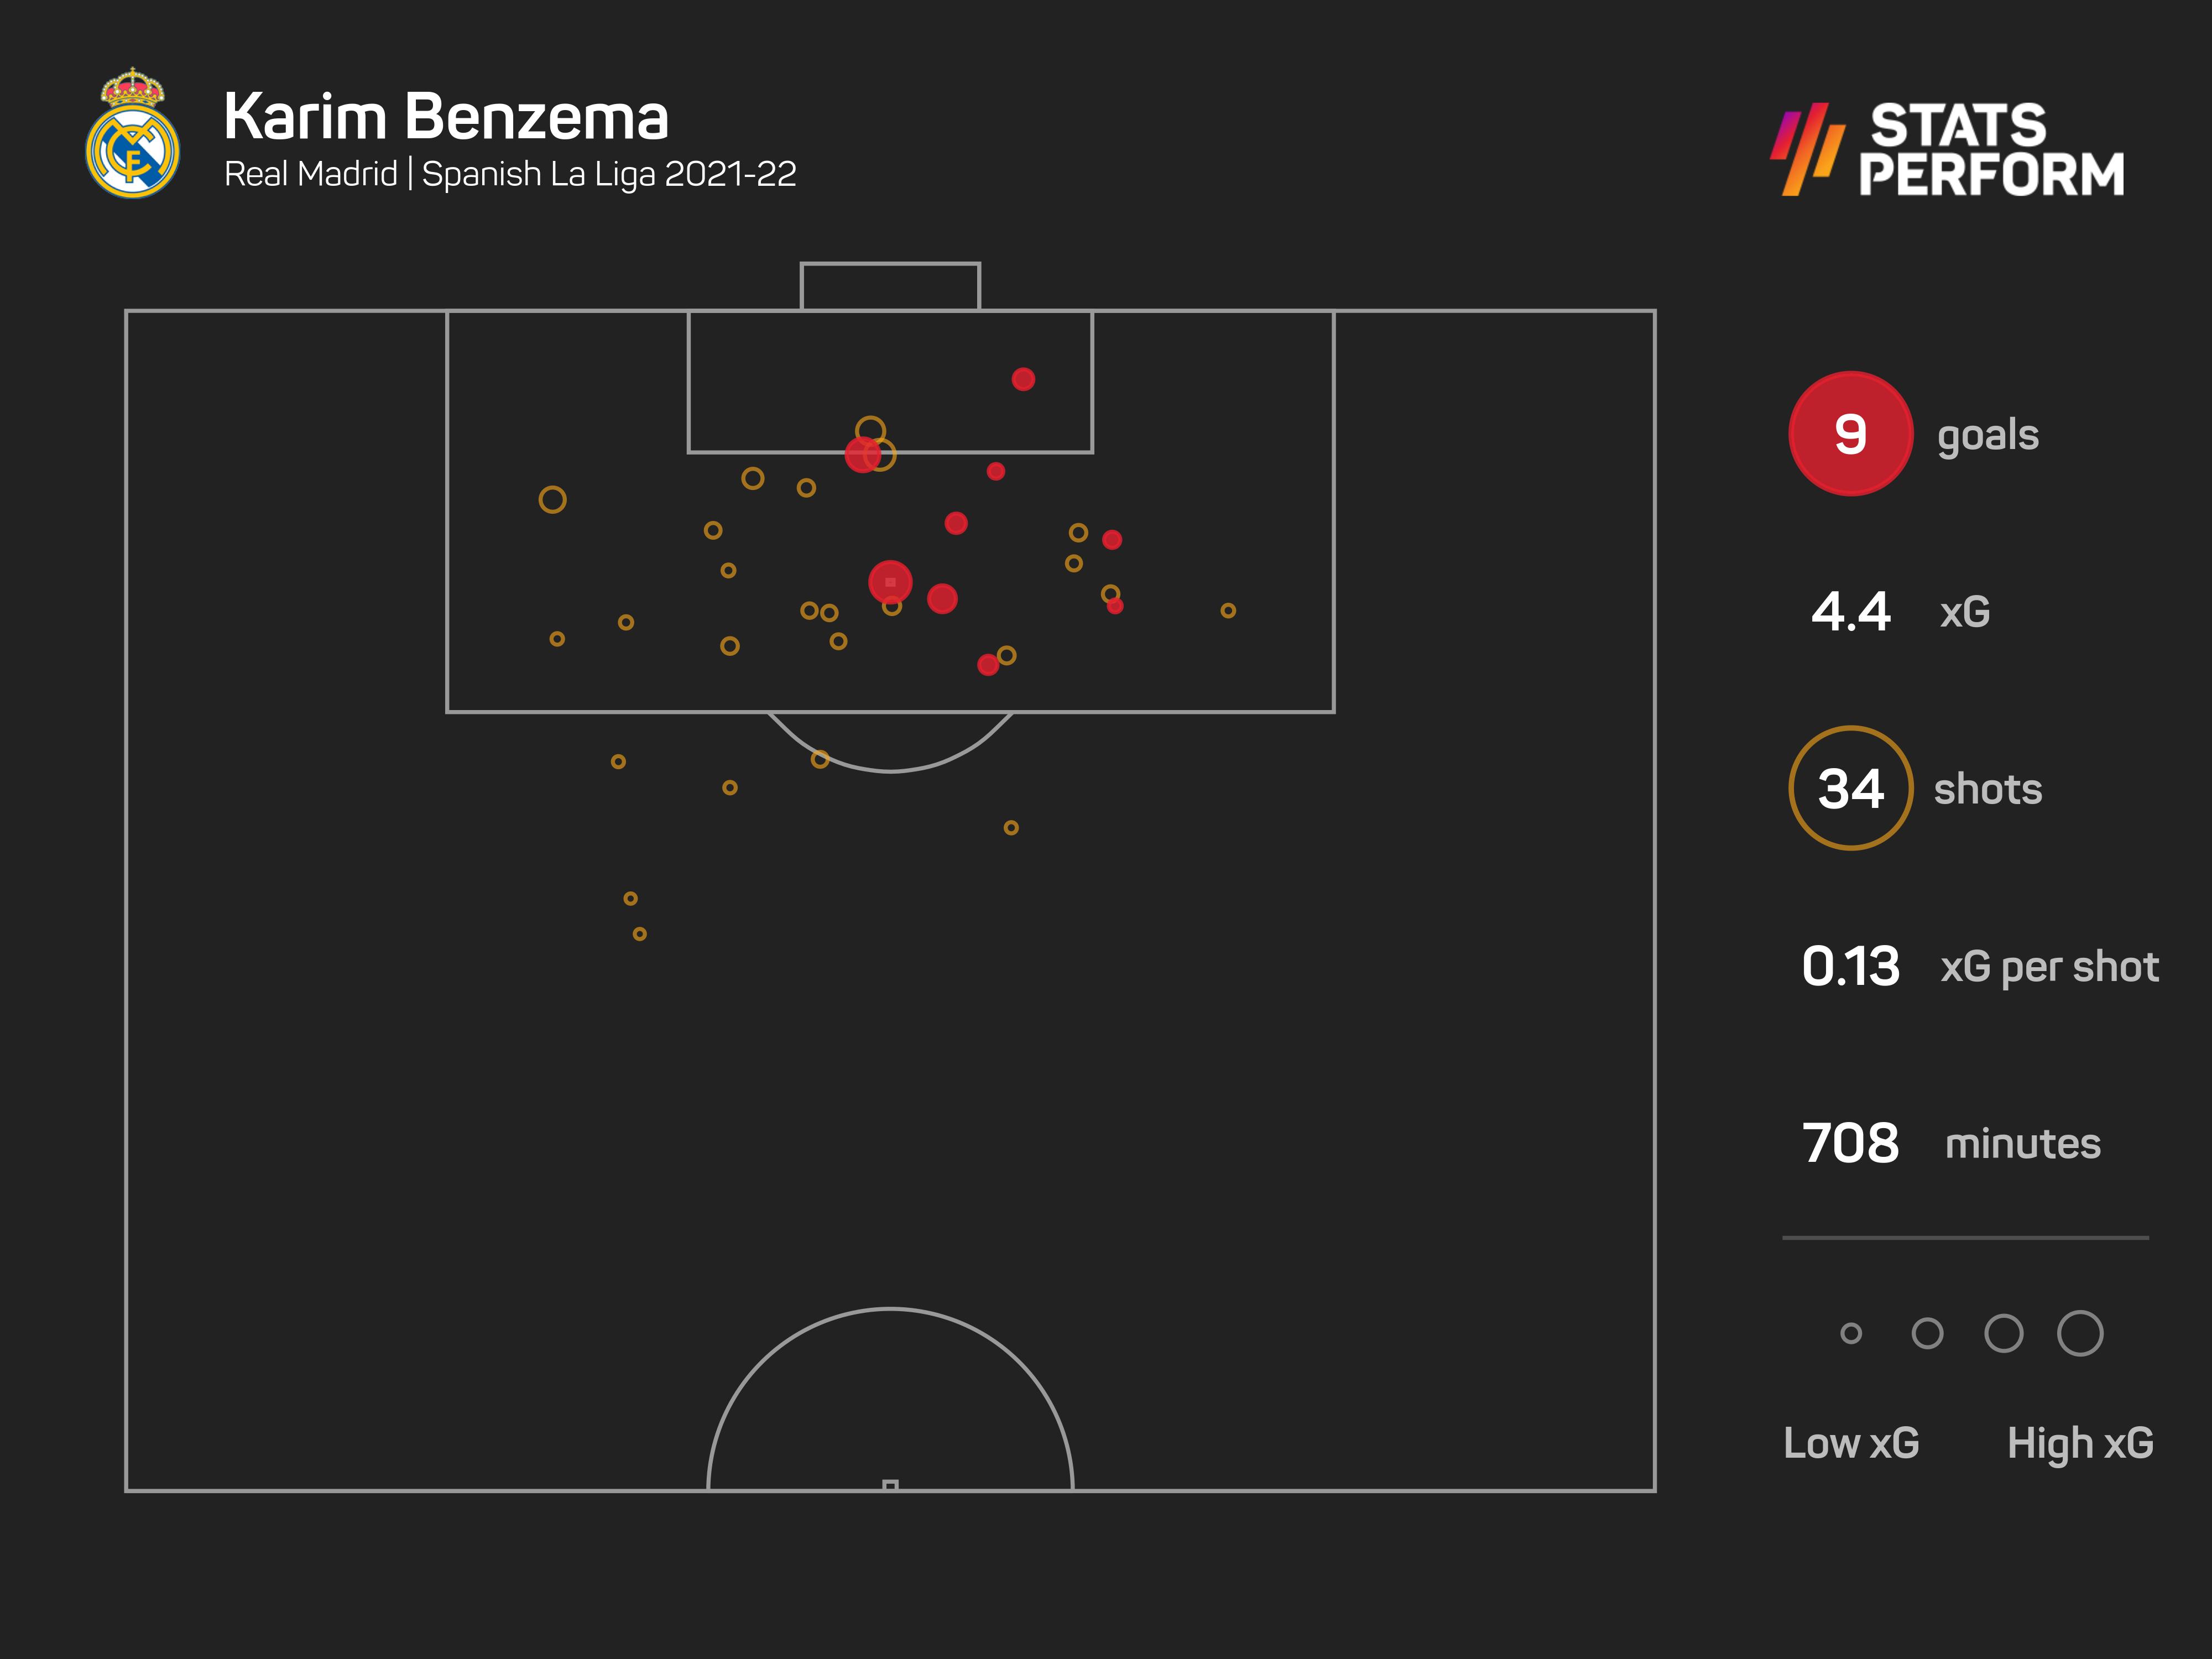 Karim Benzema is LaLiga's outstanding player